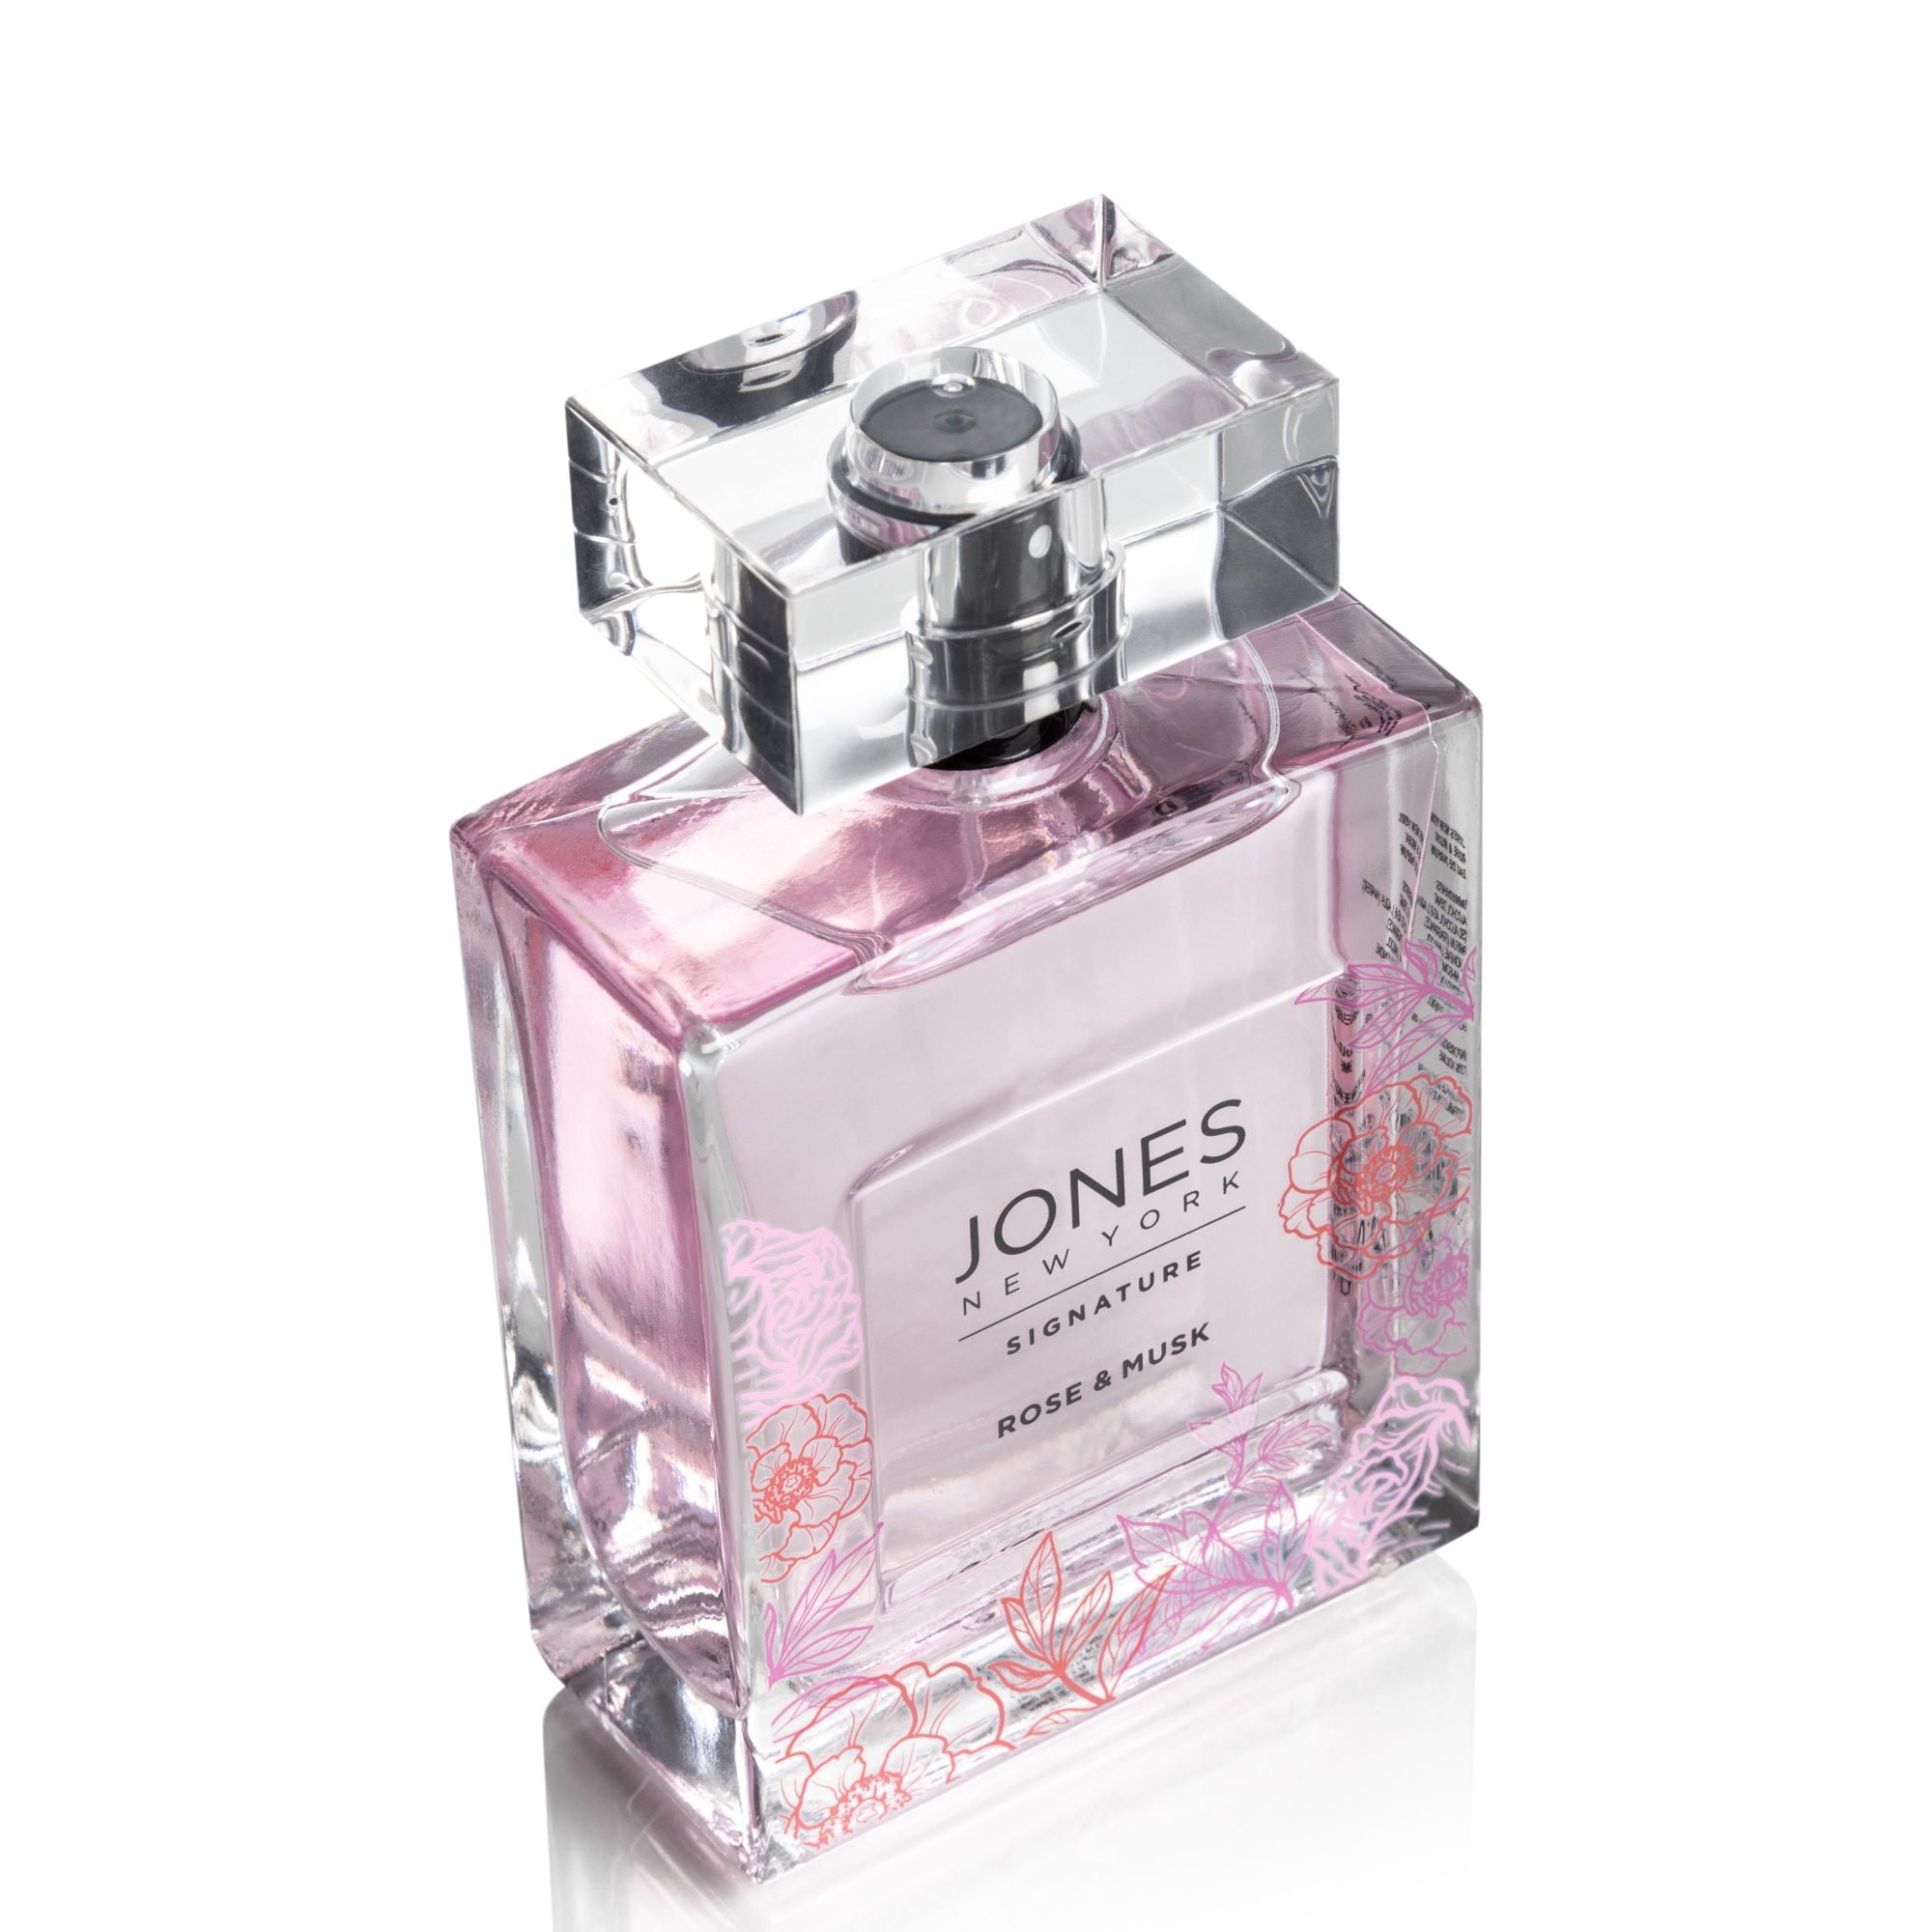 Jones New York Rose & Musk Eau De Parfum Fragrance for Women, 3.4